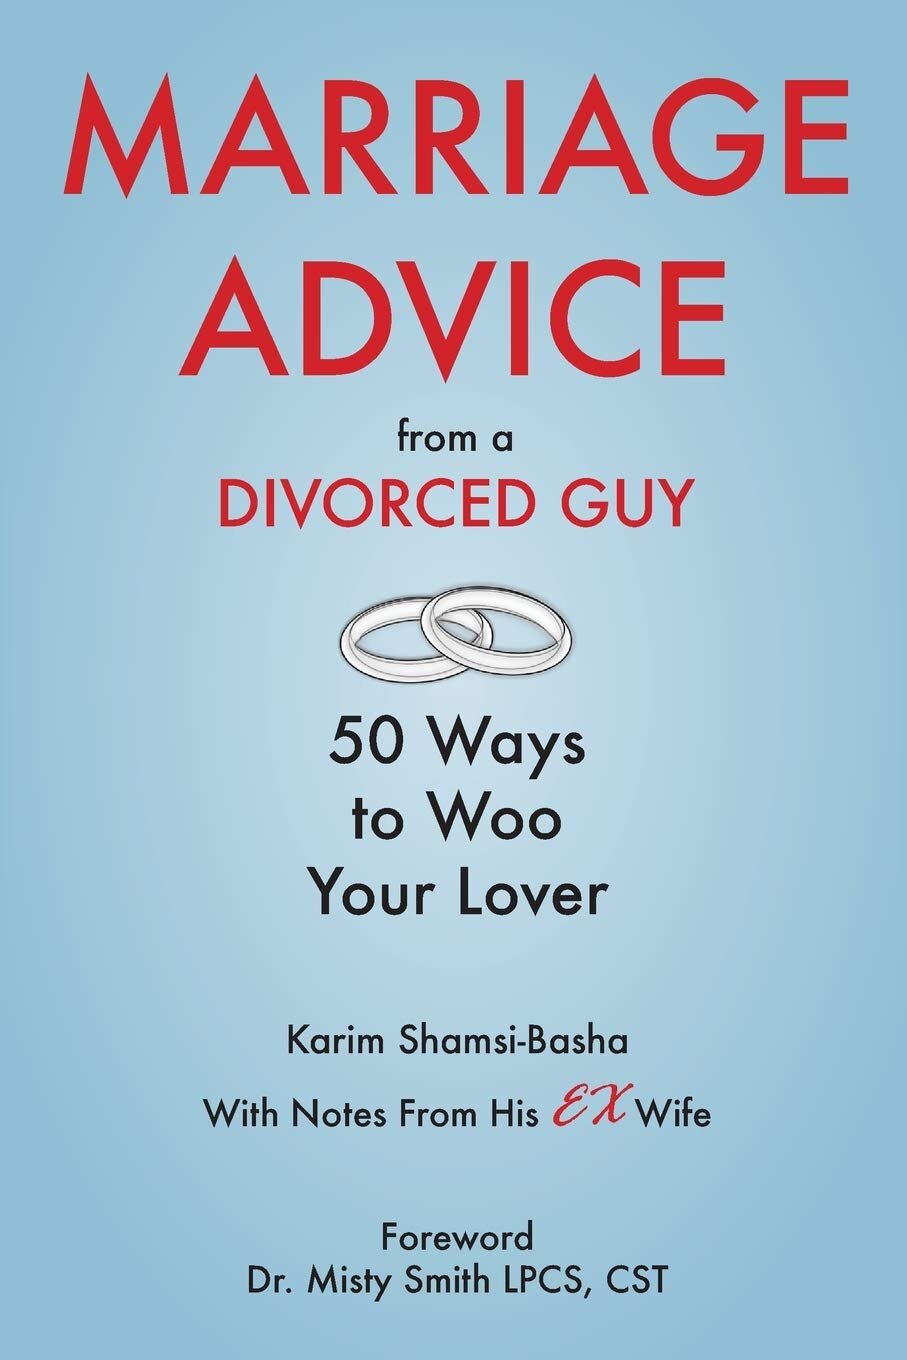 MARRIAGE ADVICE FROM A DIVORCED GUY by Karim Shamsi-Basha